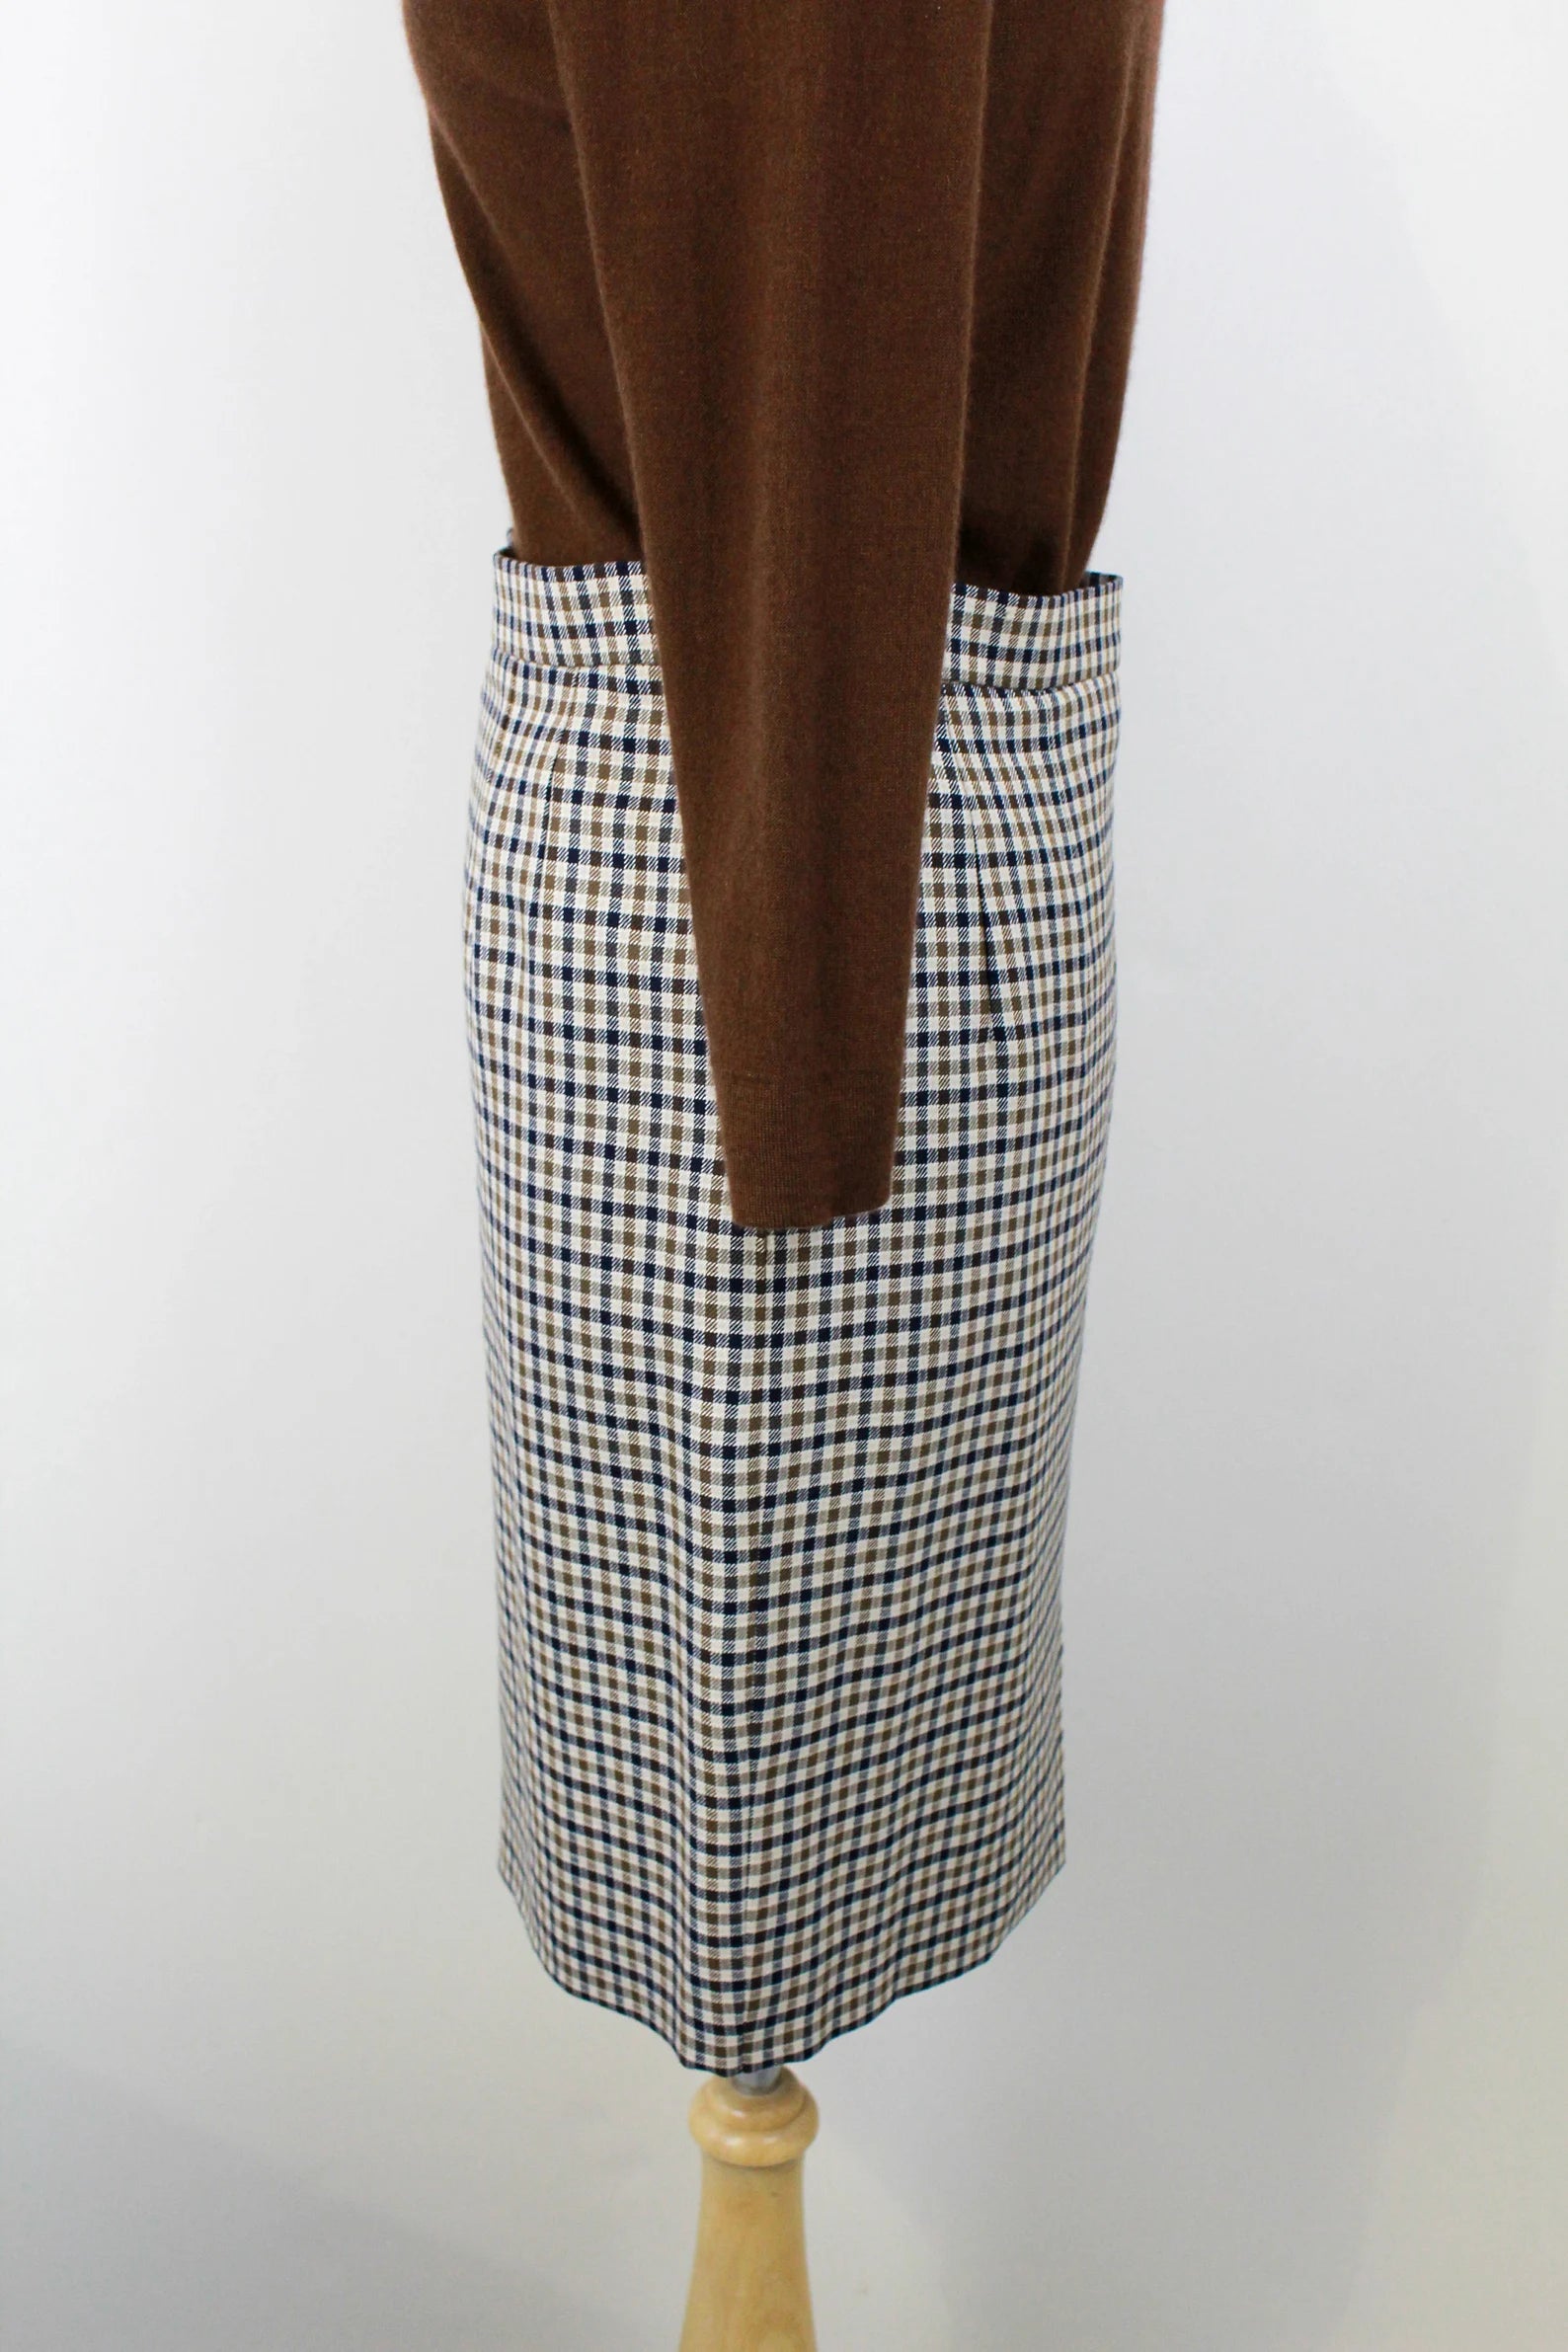 90s Brown Checked Skirt, Vintage 1990s Mini Skirt, Aquascutum Minimalist Preppy Skirt, Waist 29